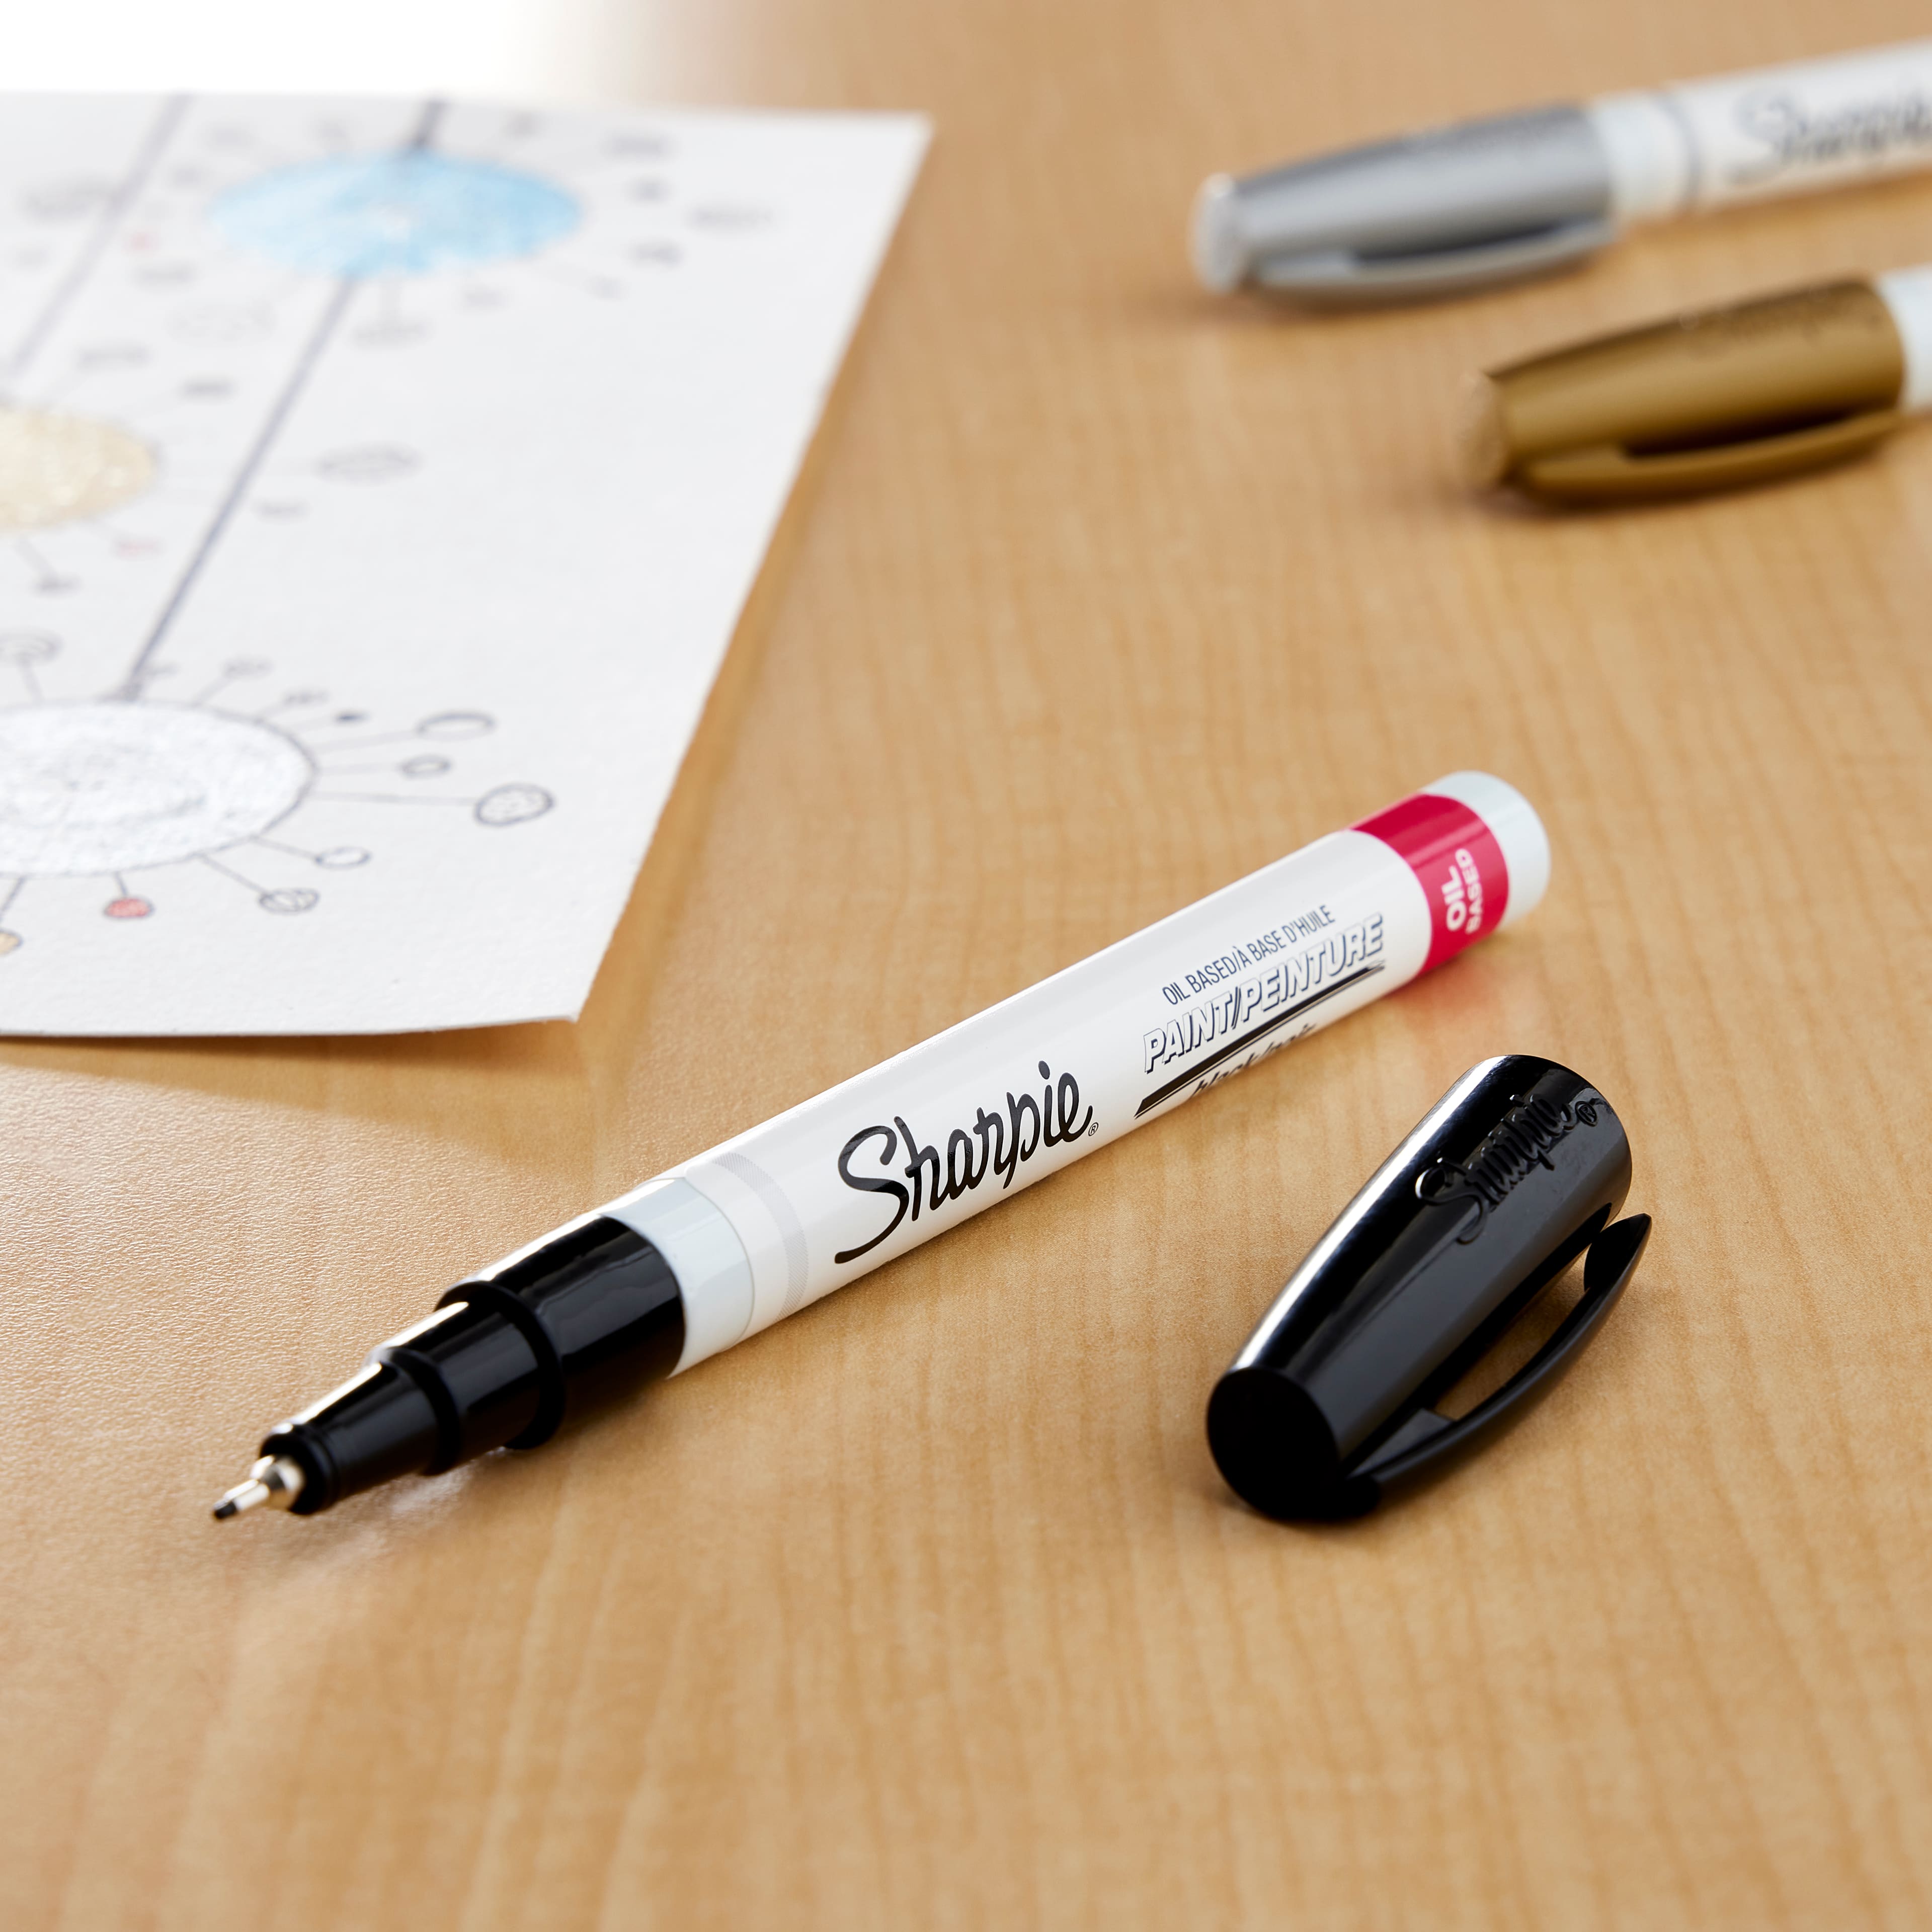 Sharpie® Oil-Based Paint Marker, Fine Point